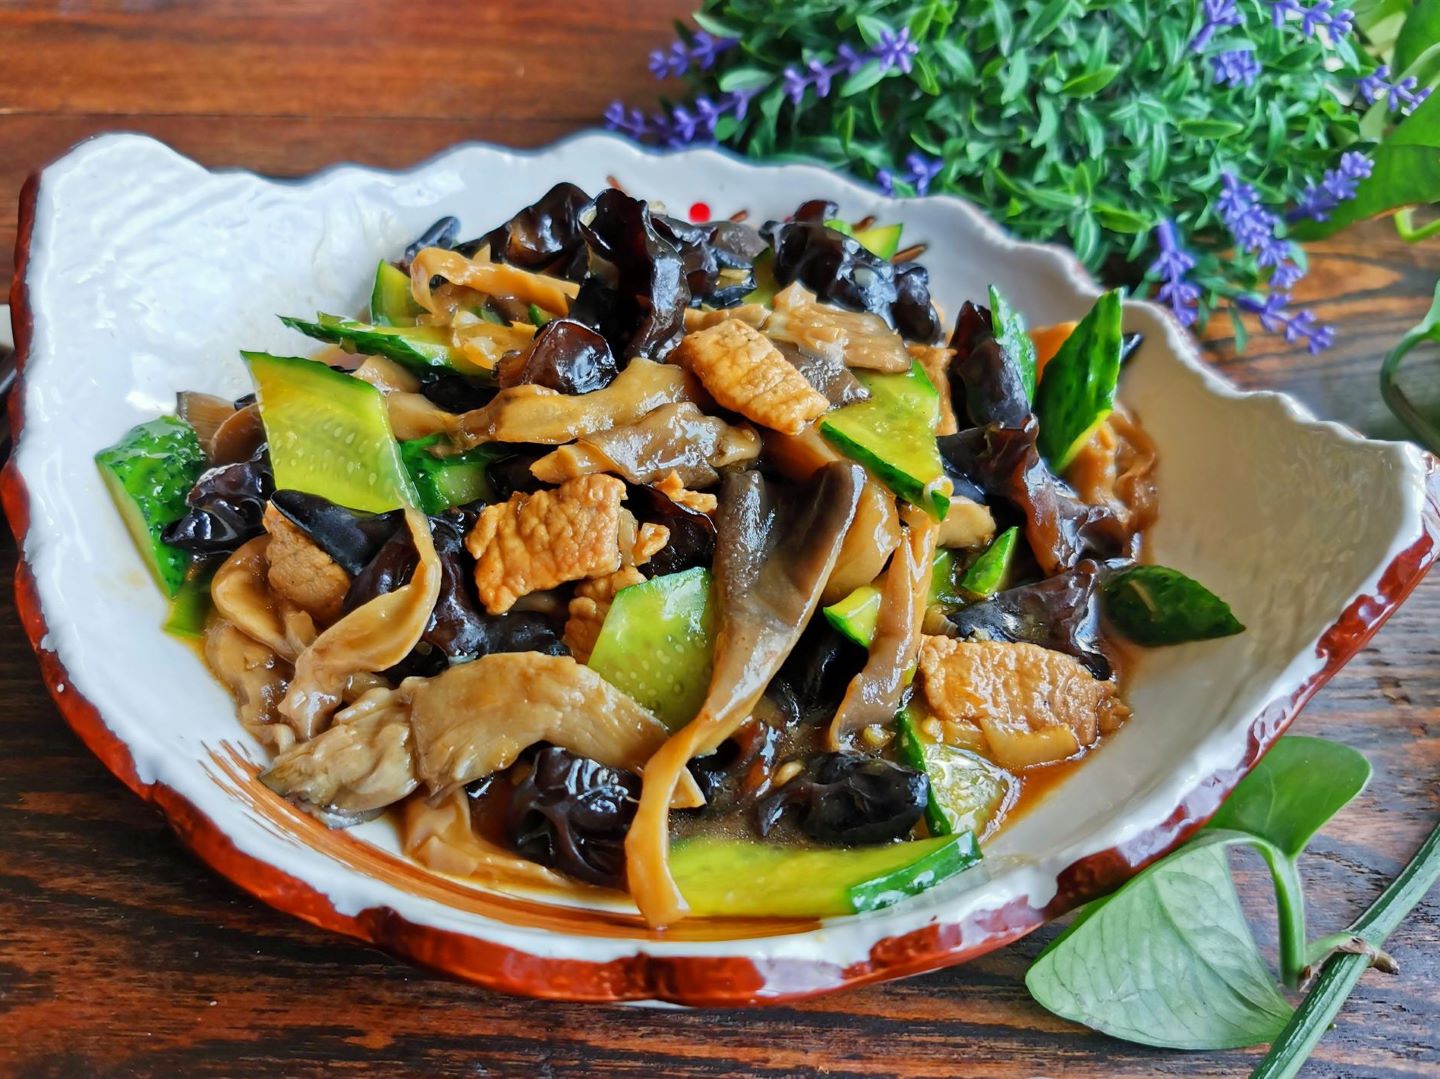 Mushrooms, black fungus and cucumber stir-fry with pork